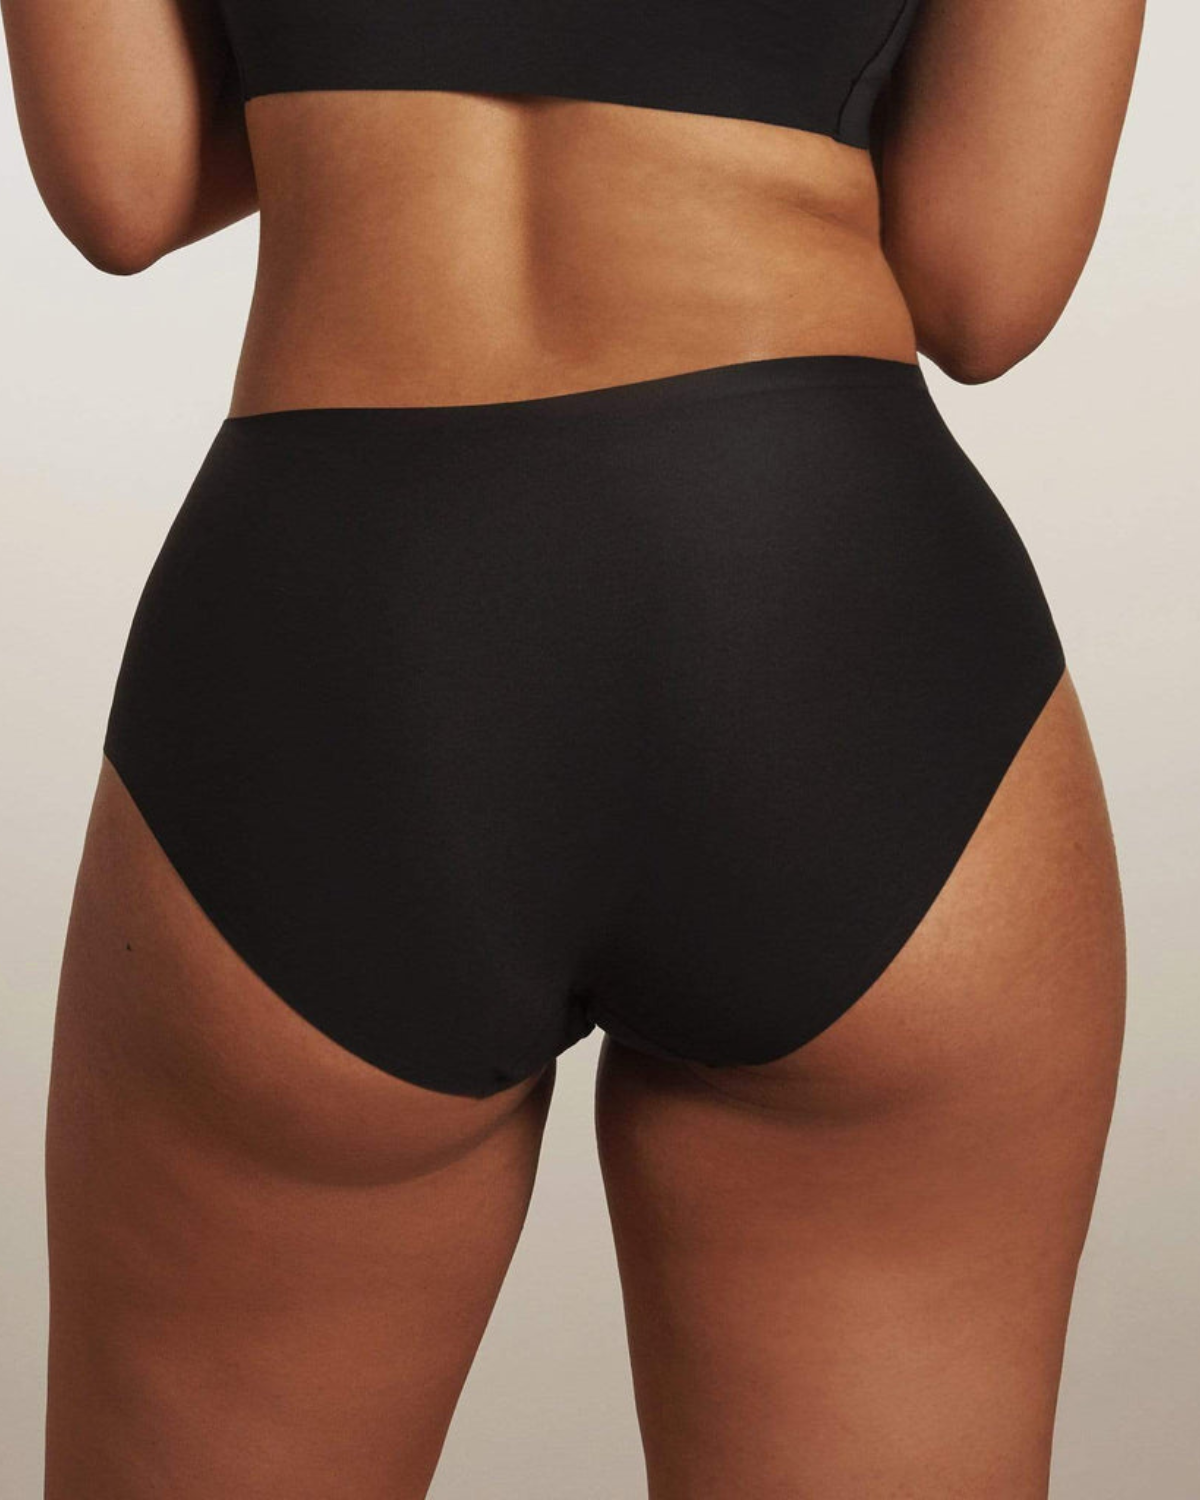 Model wearing a black high waist seamless brief panty